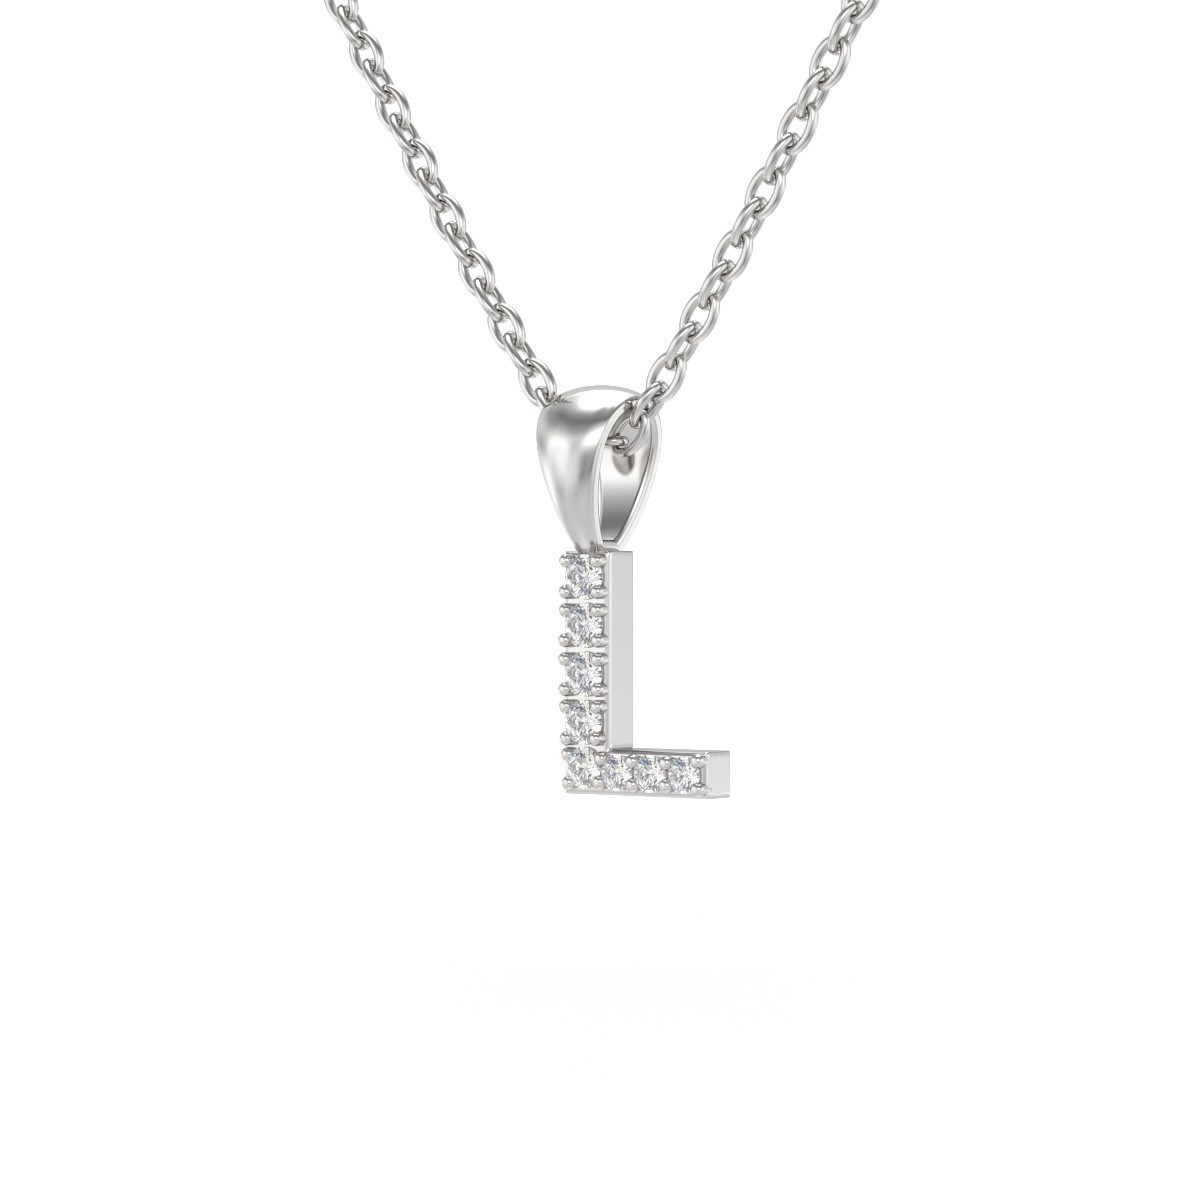 Collier Pendentif ADEN Lettre L Or 750 Blanc Diamant Chaine Or 750 incluse 0.72grs - vue 3